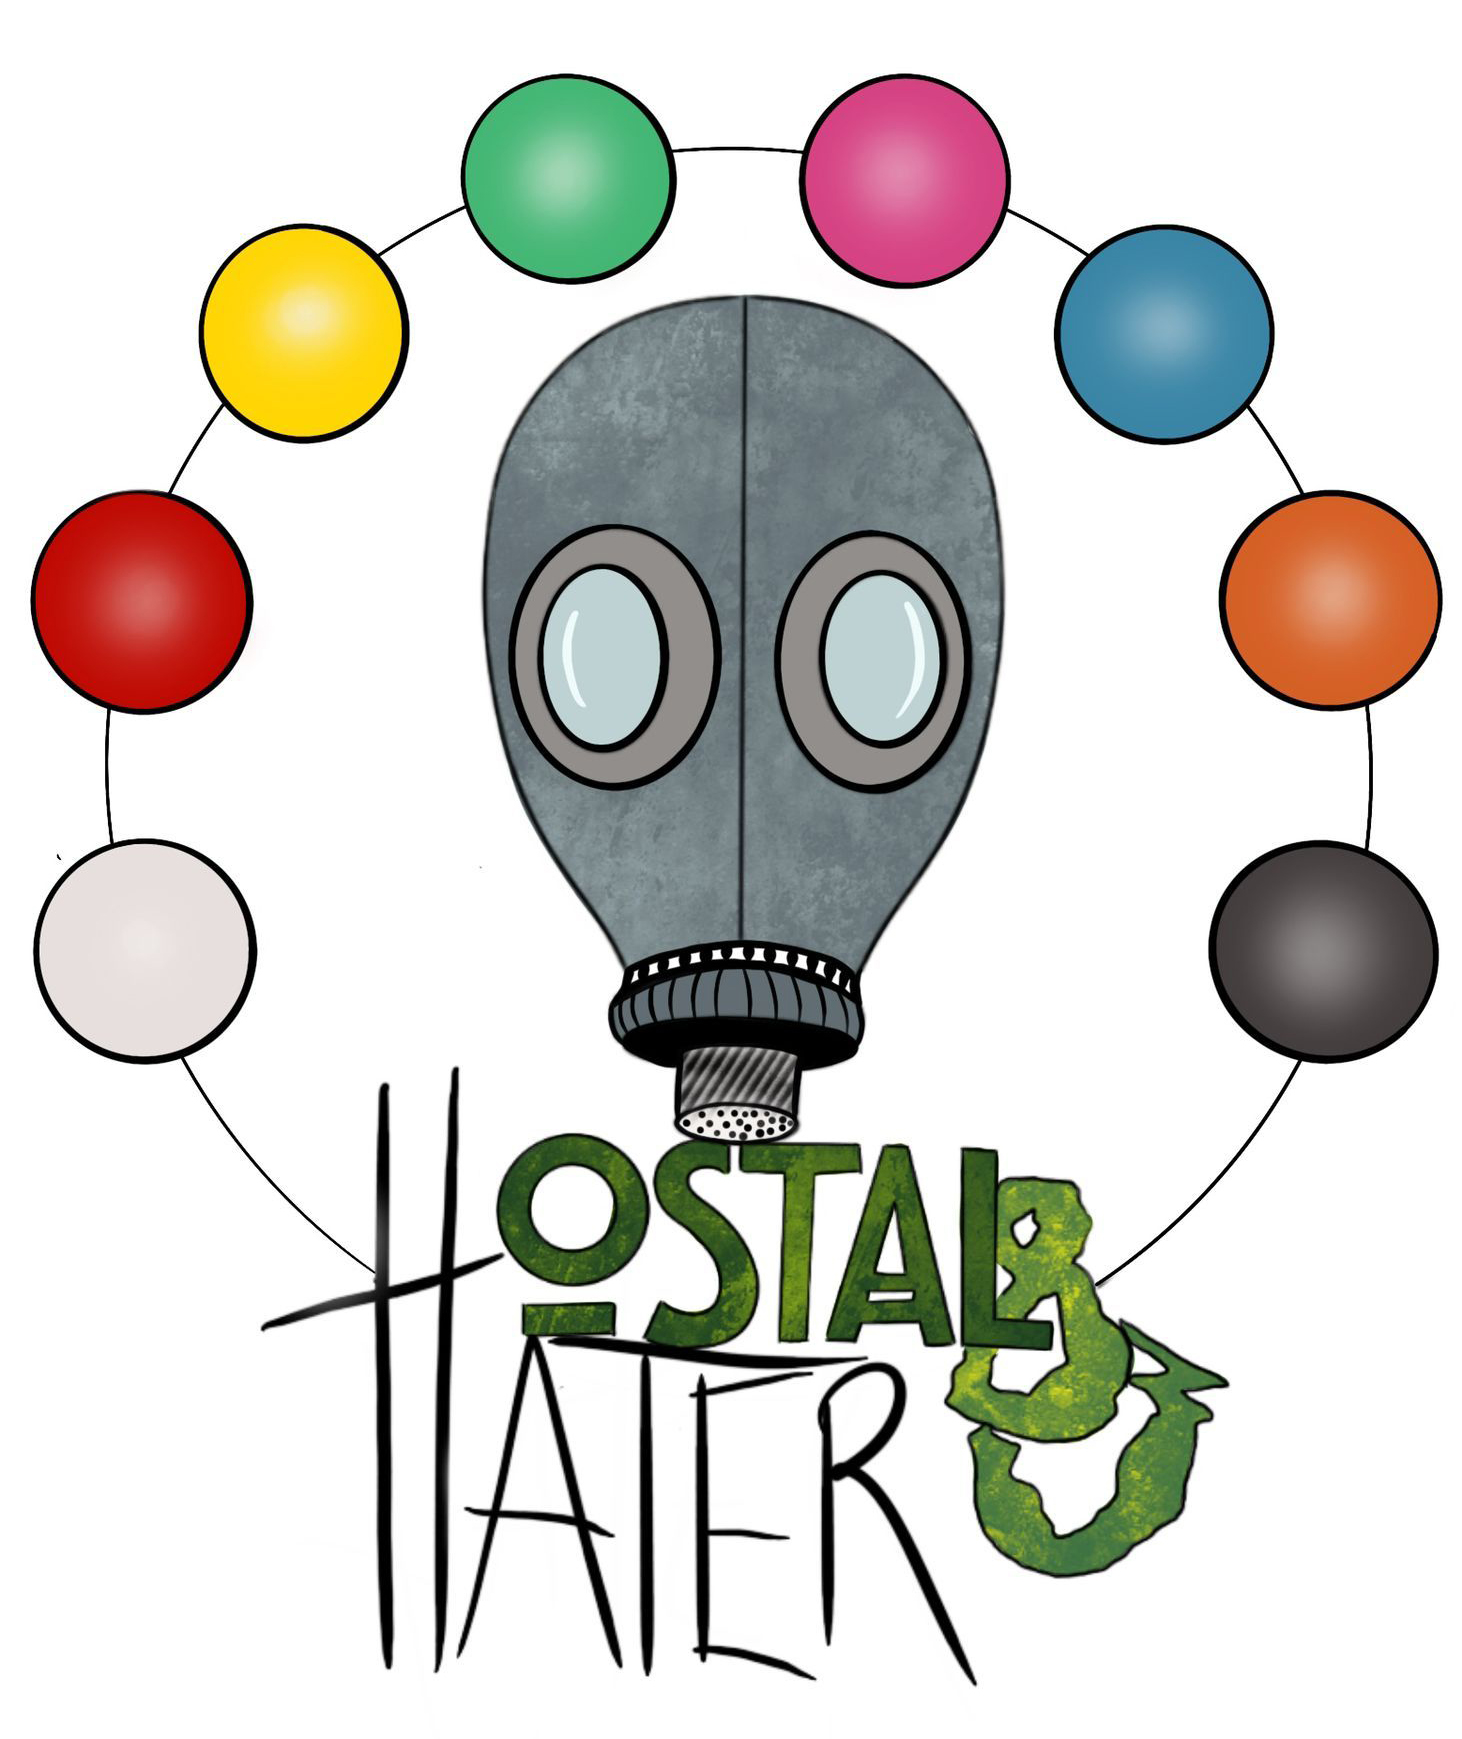 Hostal 83 Hater